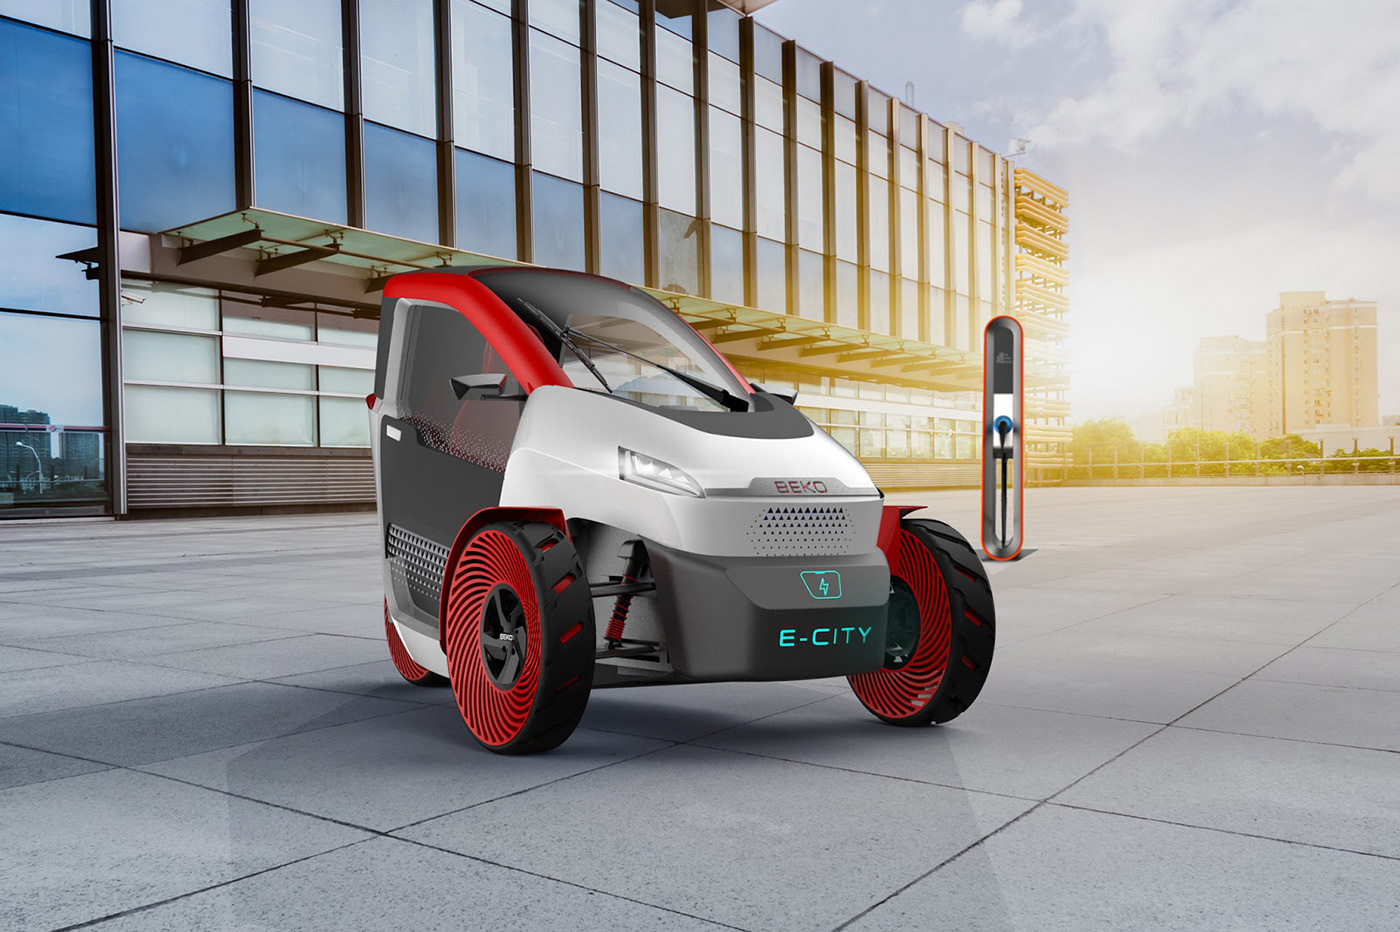 design electric Vehicle three wheeler concept ecity mobility city emobility future